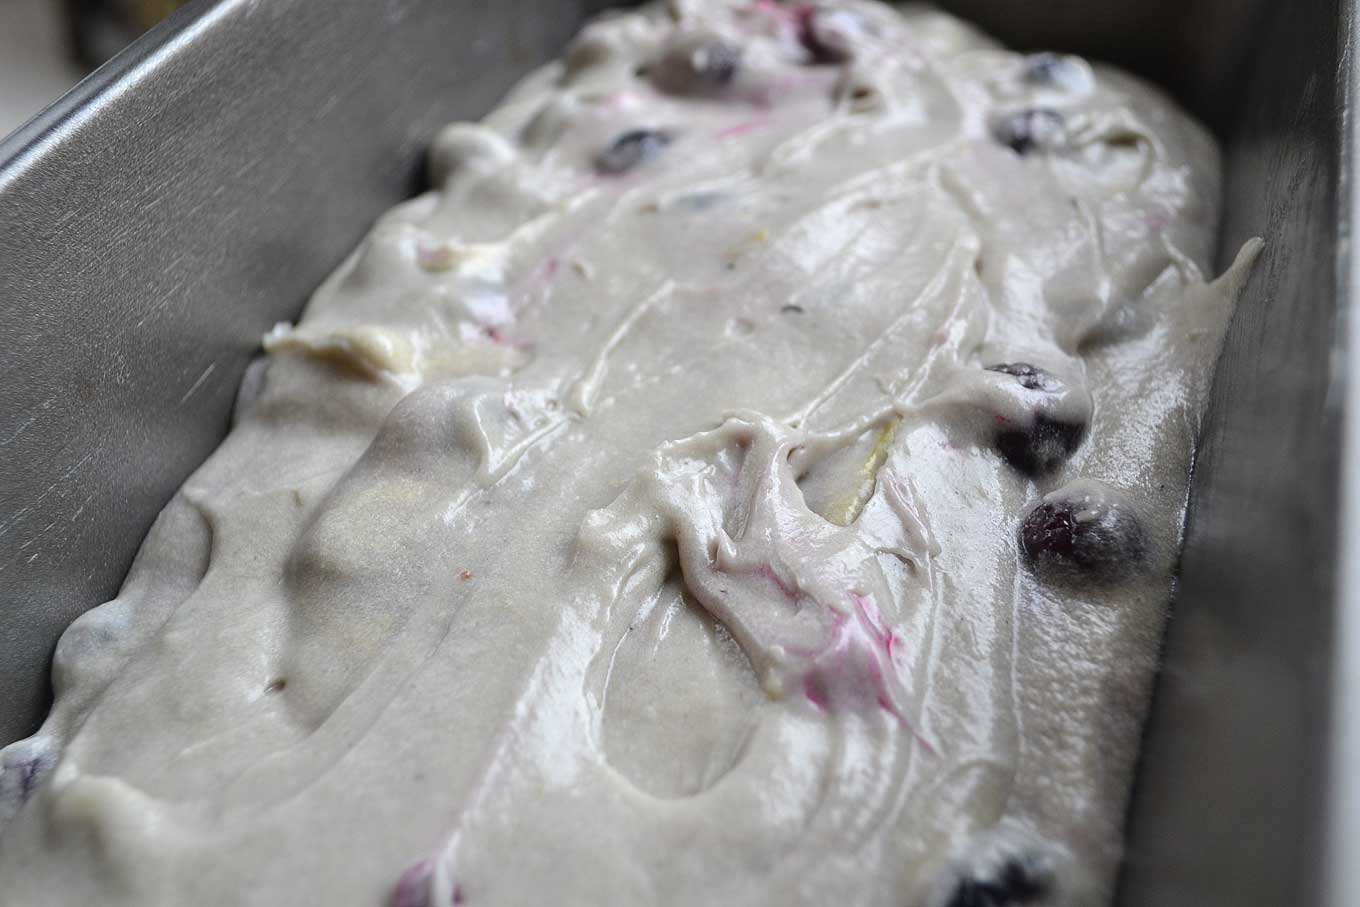 blueberry & lemon bread with citrus glaze | rusticplate.com